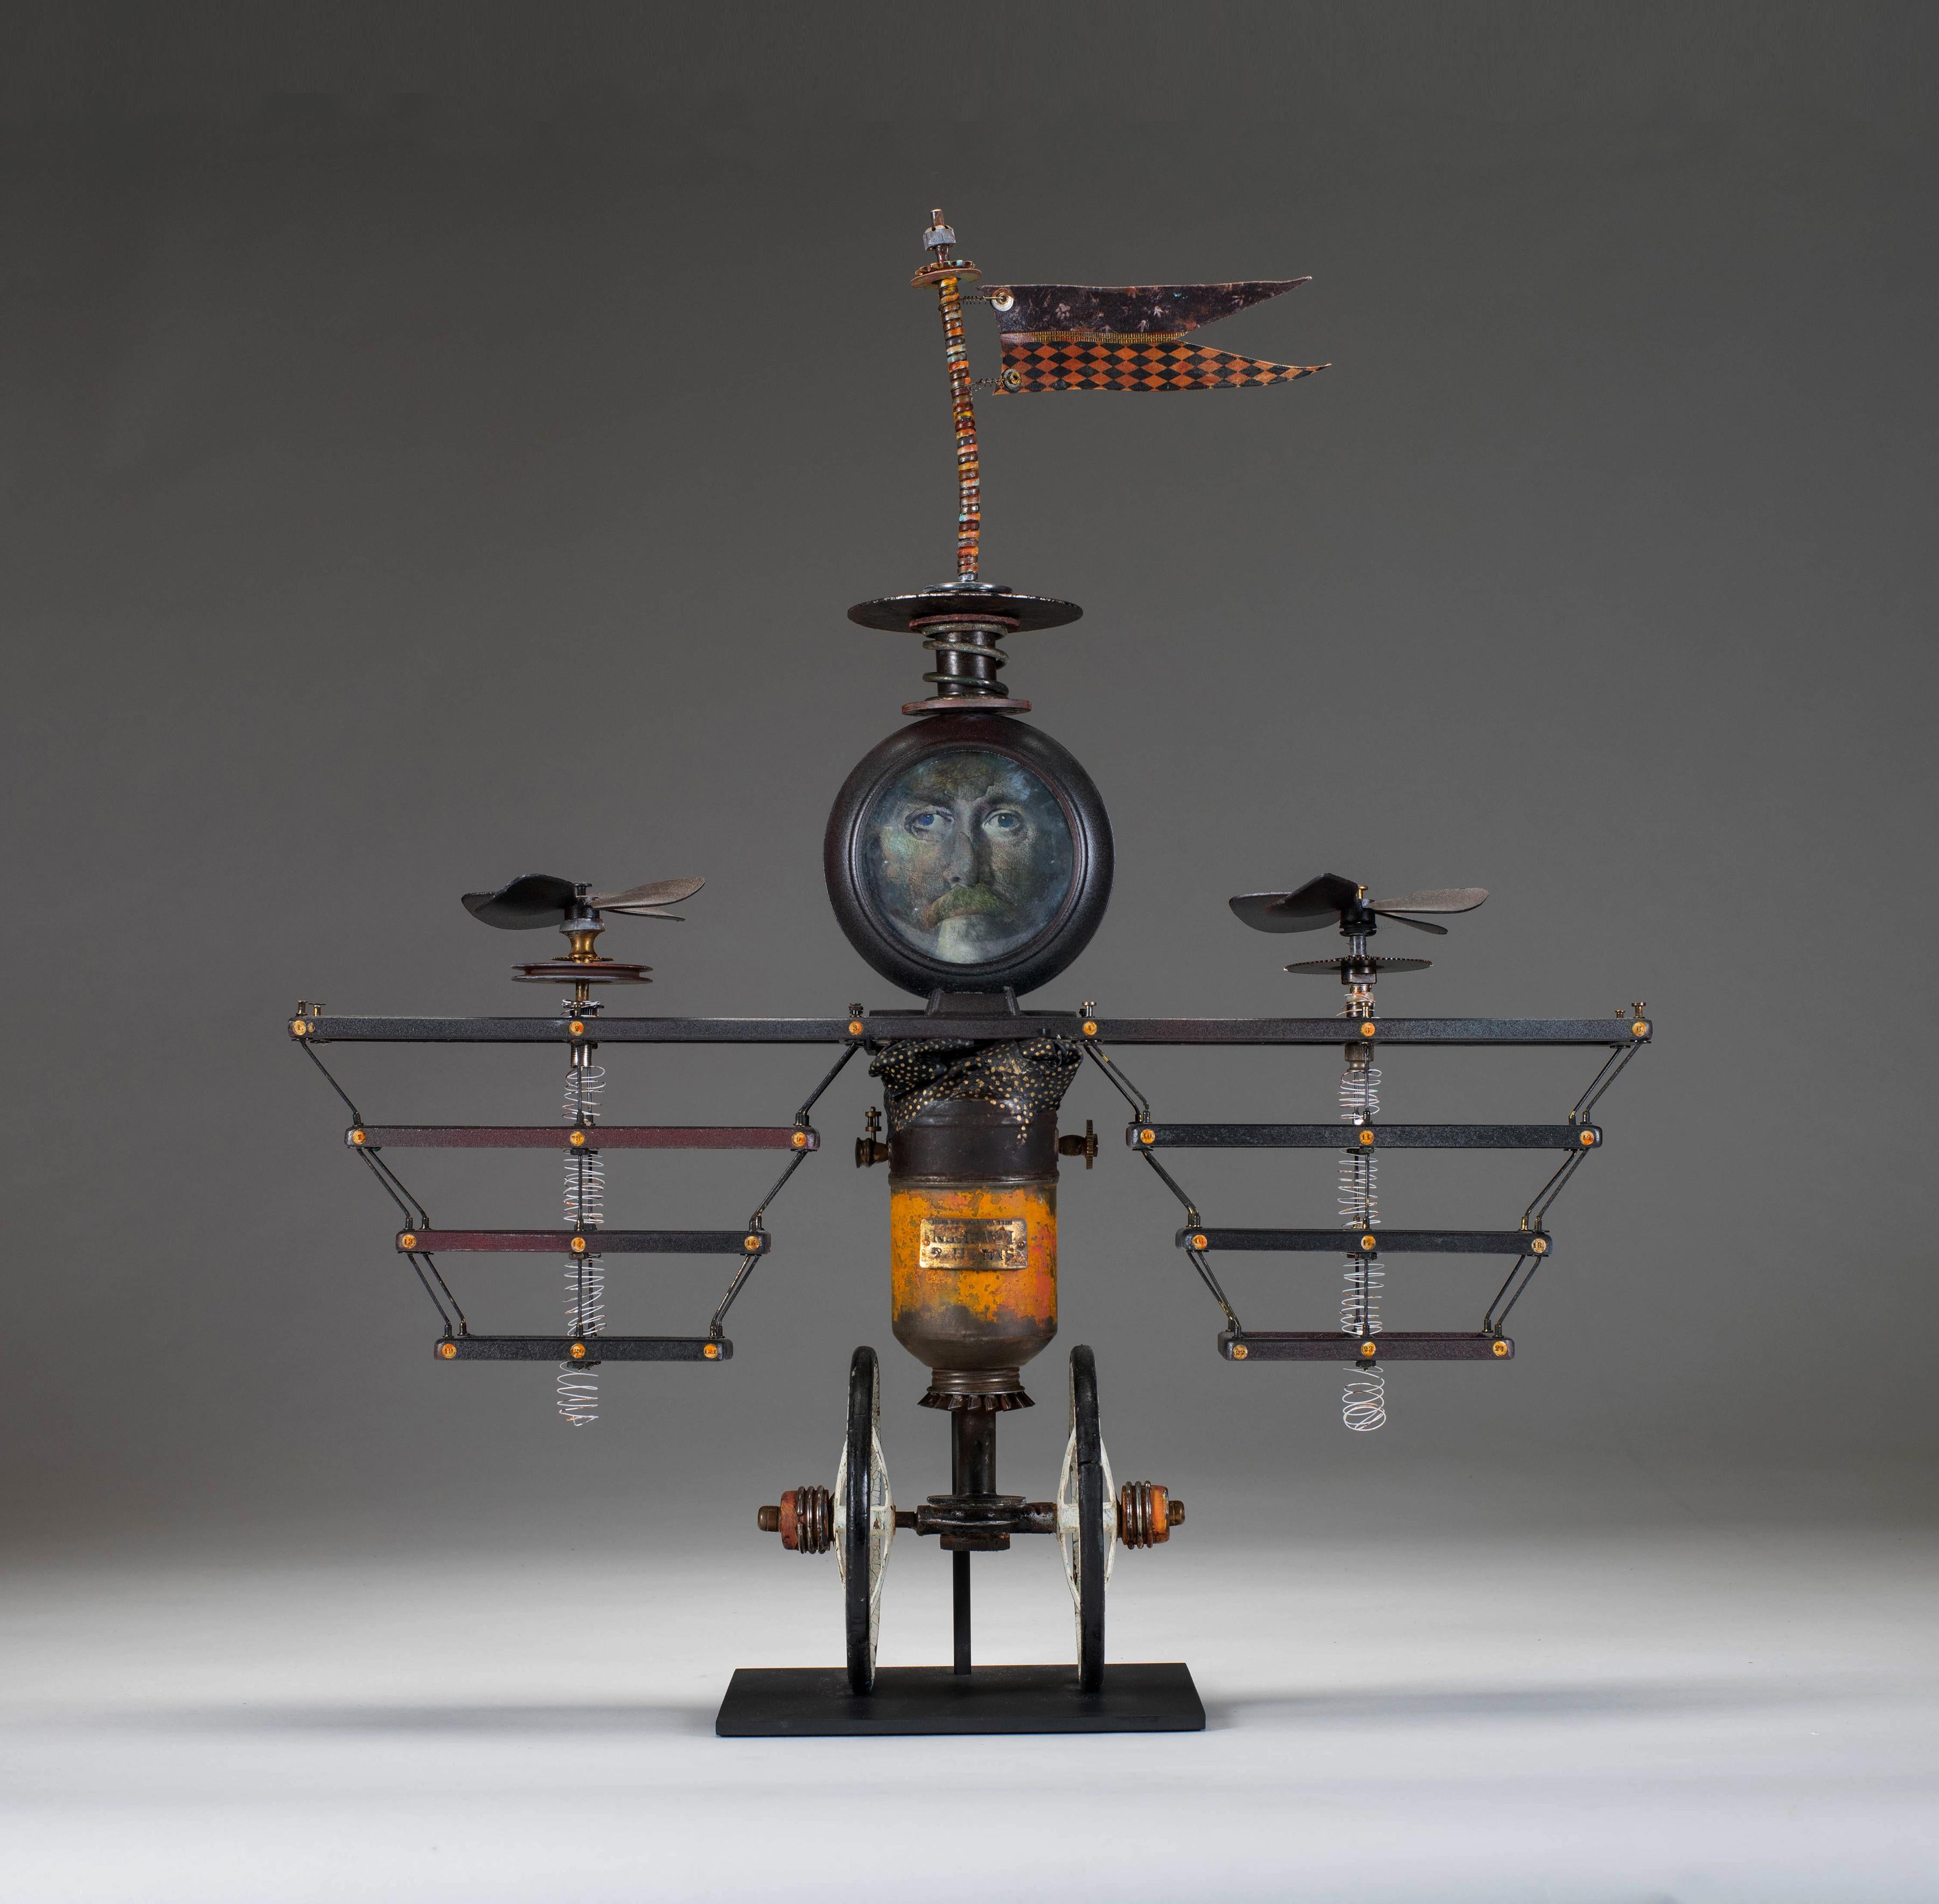 Figurative Sculpture David Barnett - Sculpture surréaliste : "Clock Shop" (magasin d'horlogerie)